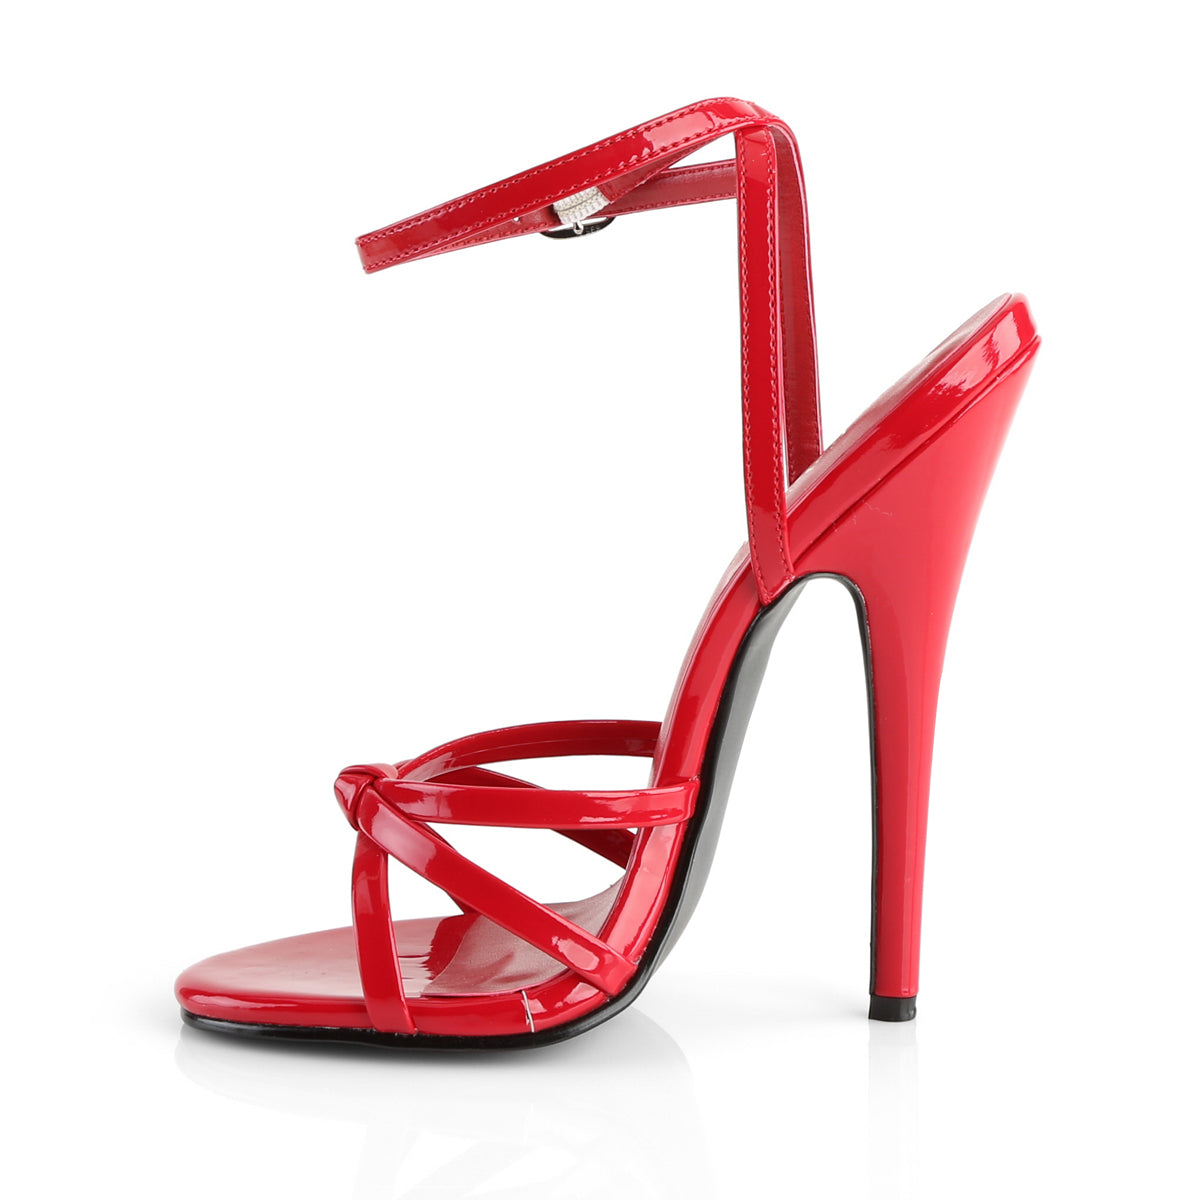 DOMINA-108 Devious Heels Red Patent Single Soles [Fetish Heels]